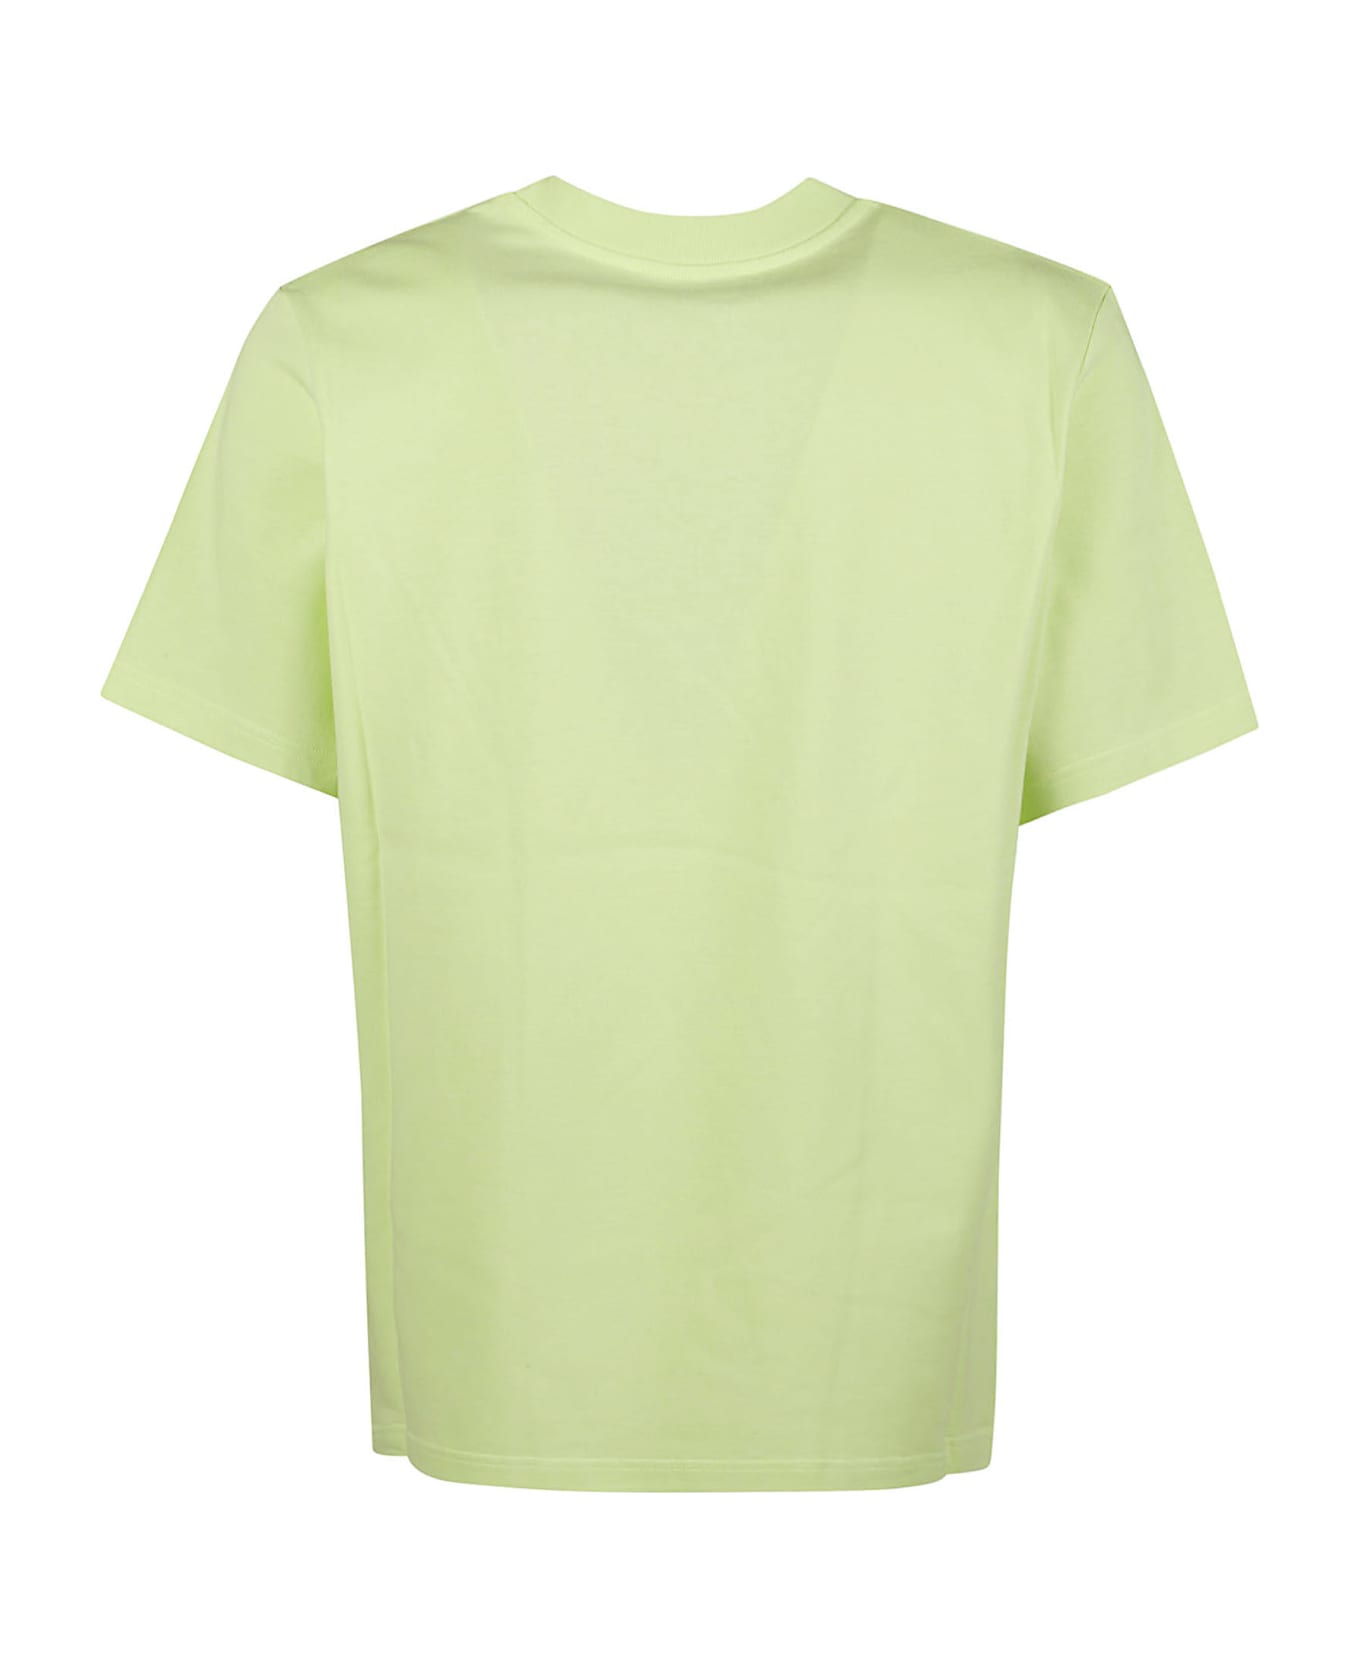 Casablanca Afro Cubism Tennis Club Printed T-shirt - Pale Green